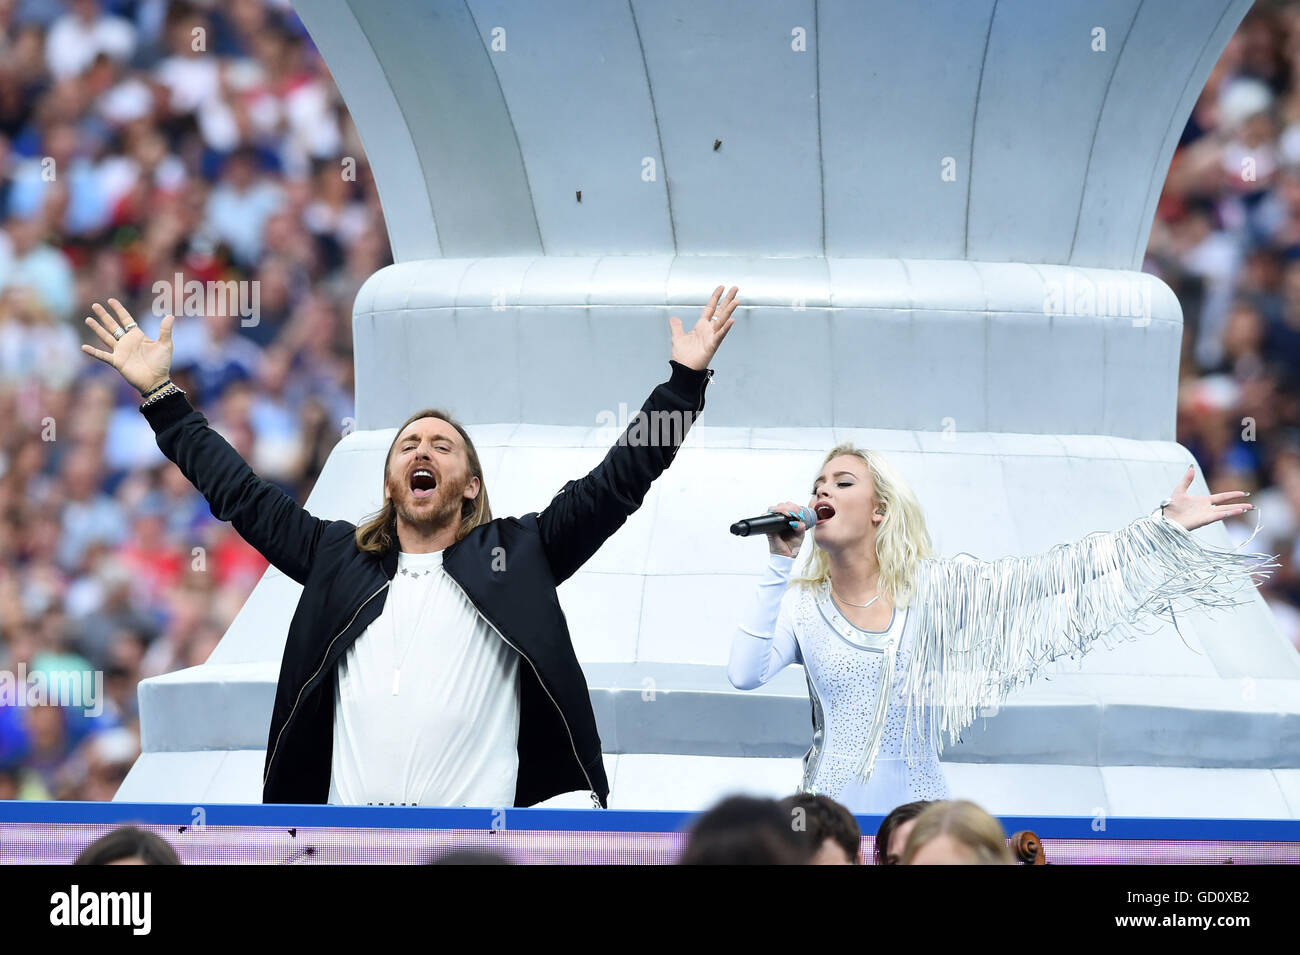 David Guetta DJ, Zara Larsson Singer ; July 10, 2016 - Football Stock Photo  - Alamy